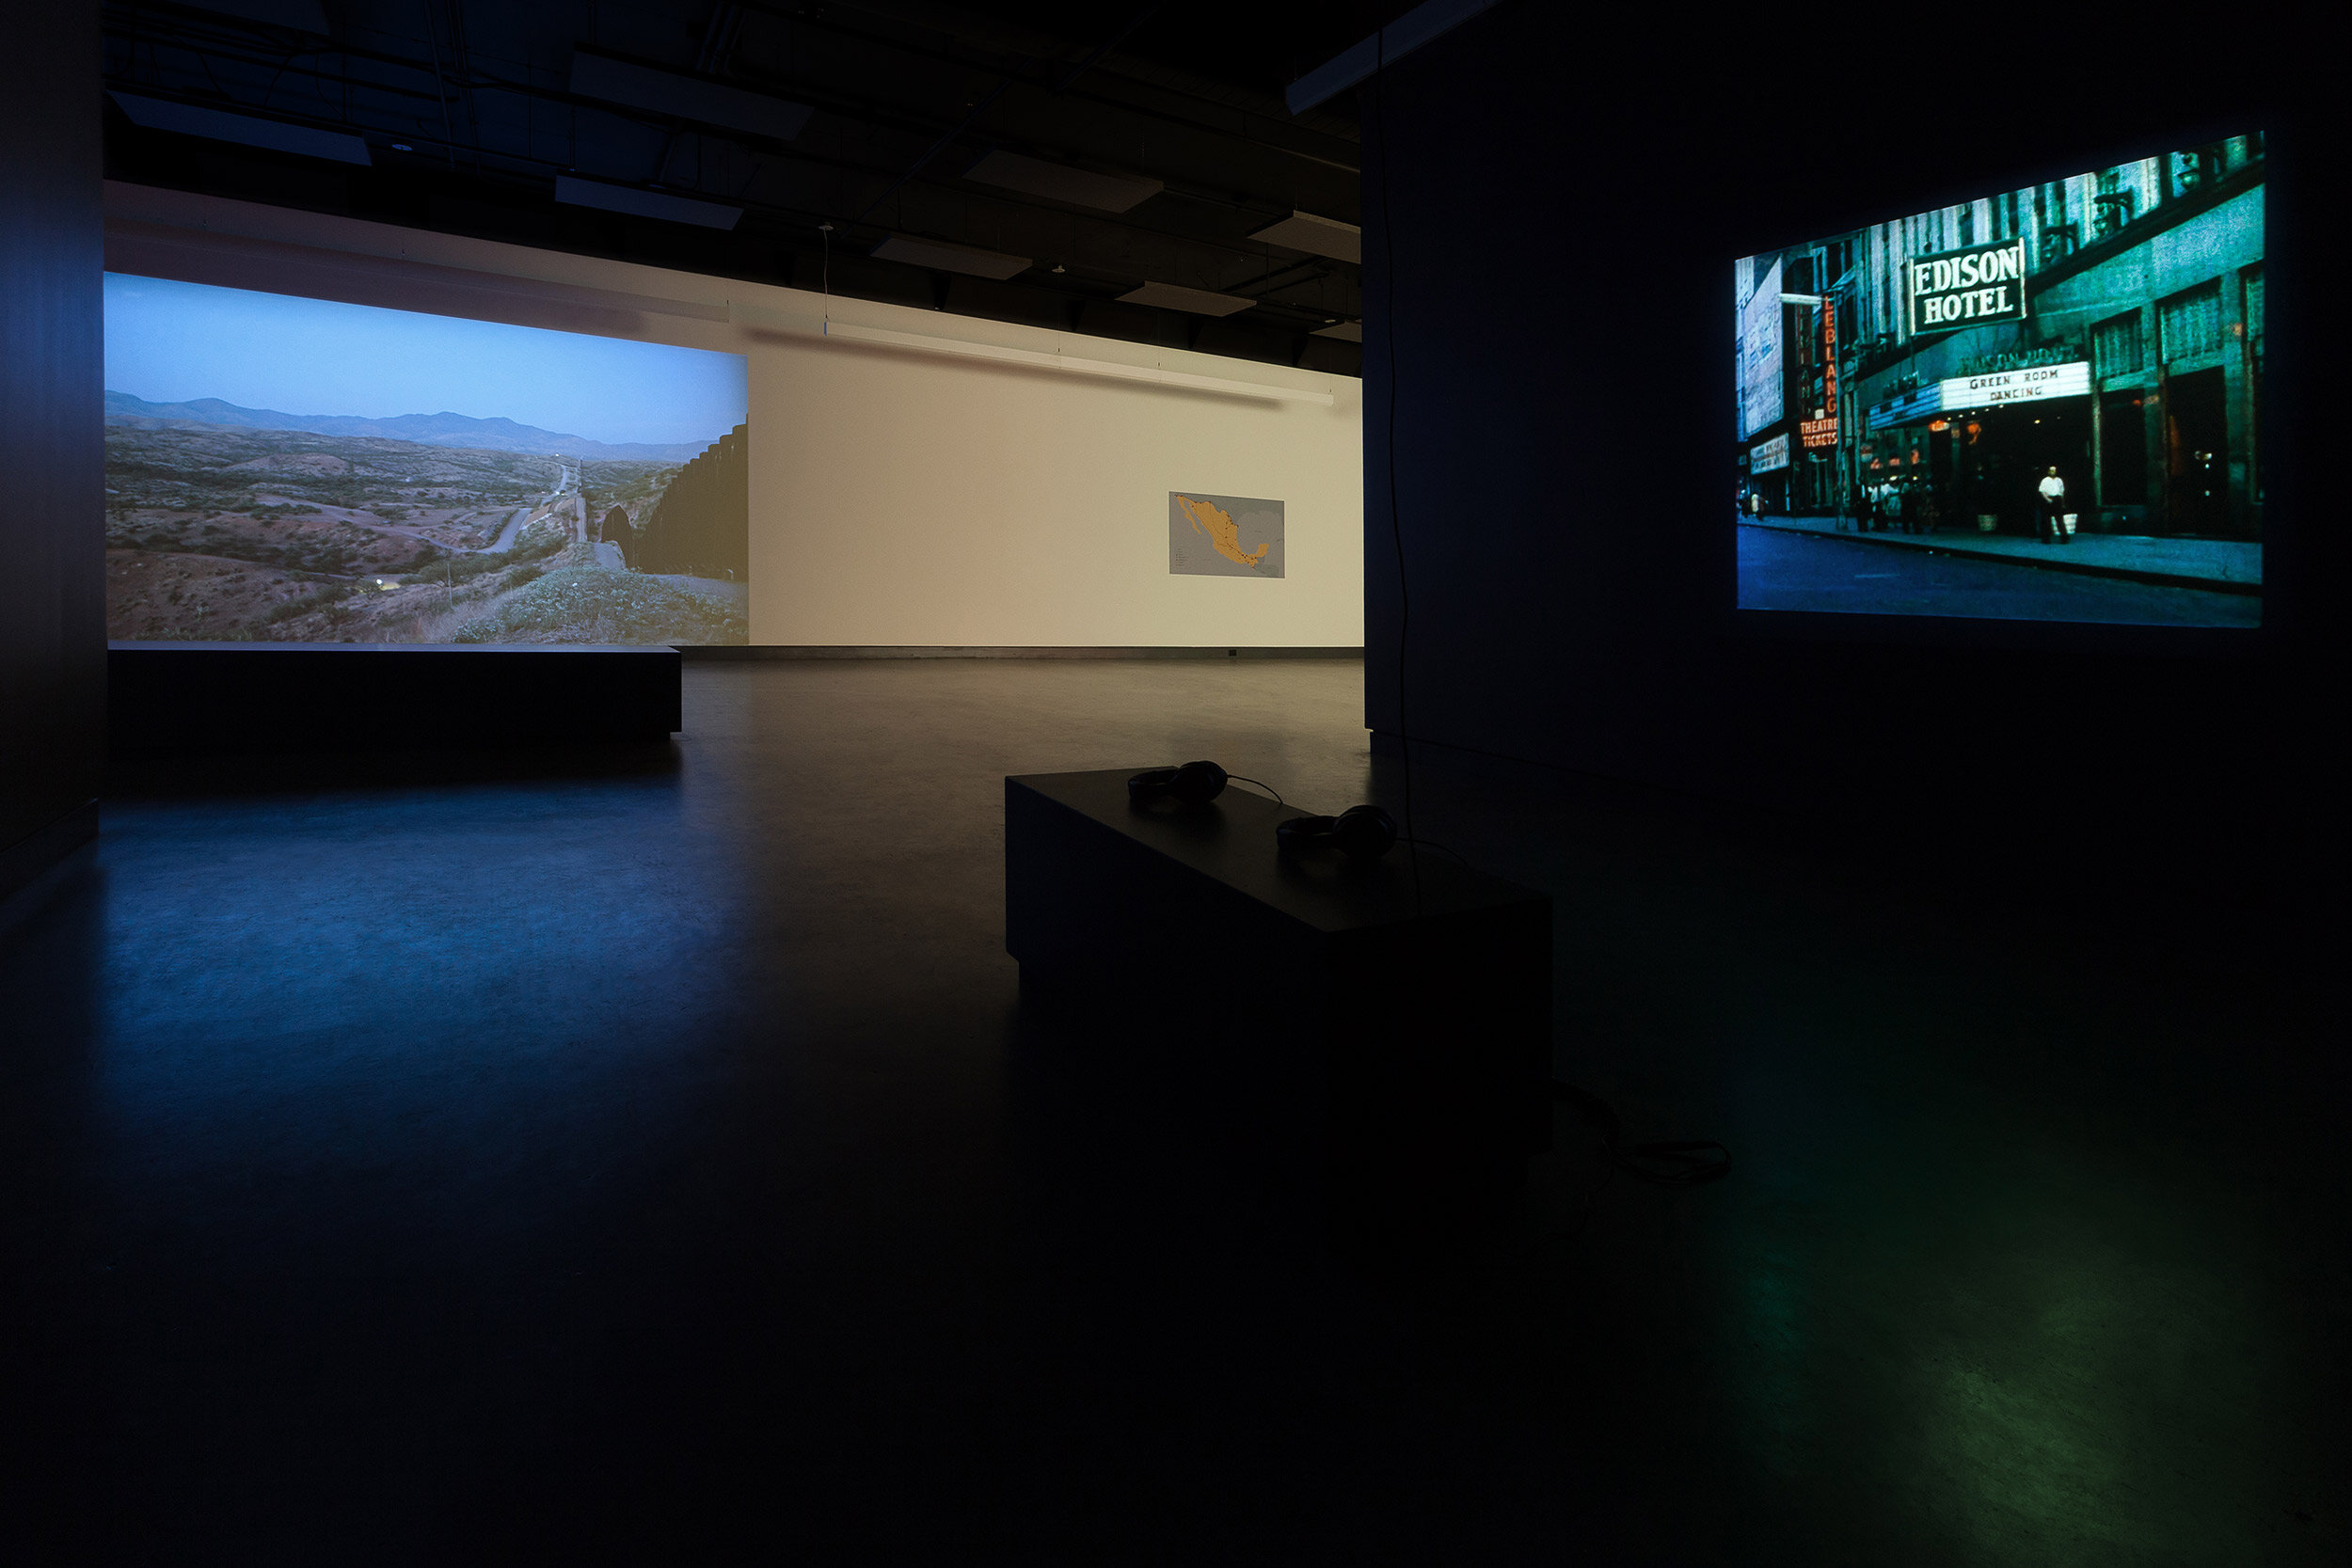  © Vue d’installation de l’exposition, Dazibao, 2017. De gauche à droite : Hubert Caron-Guay, Lisl Ponger. Photo : Marilou Crispin. 